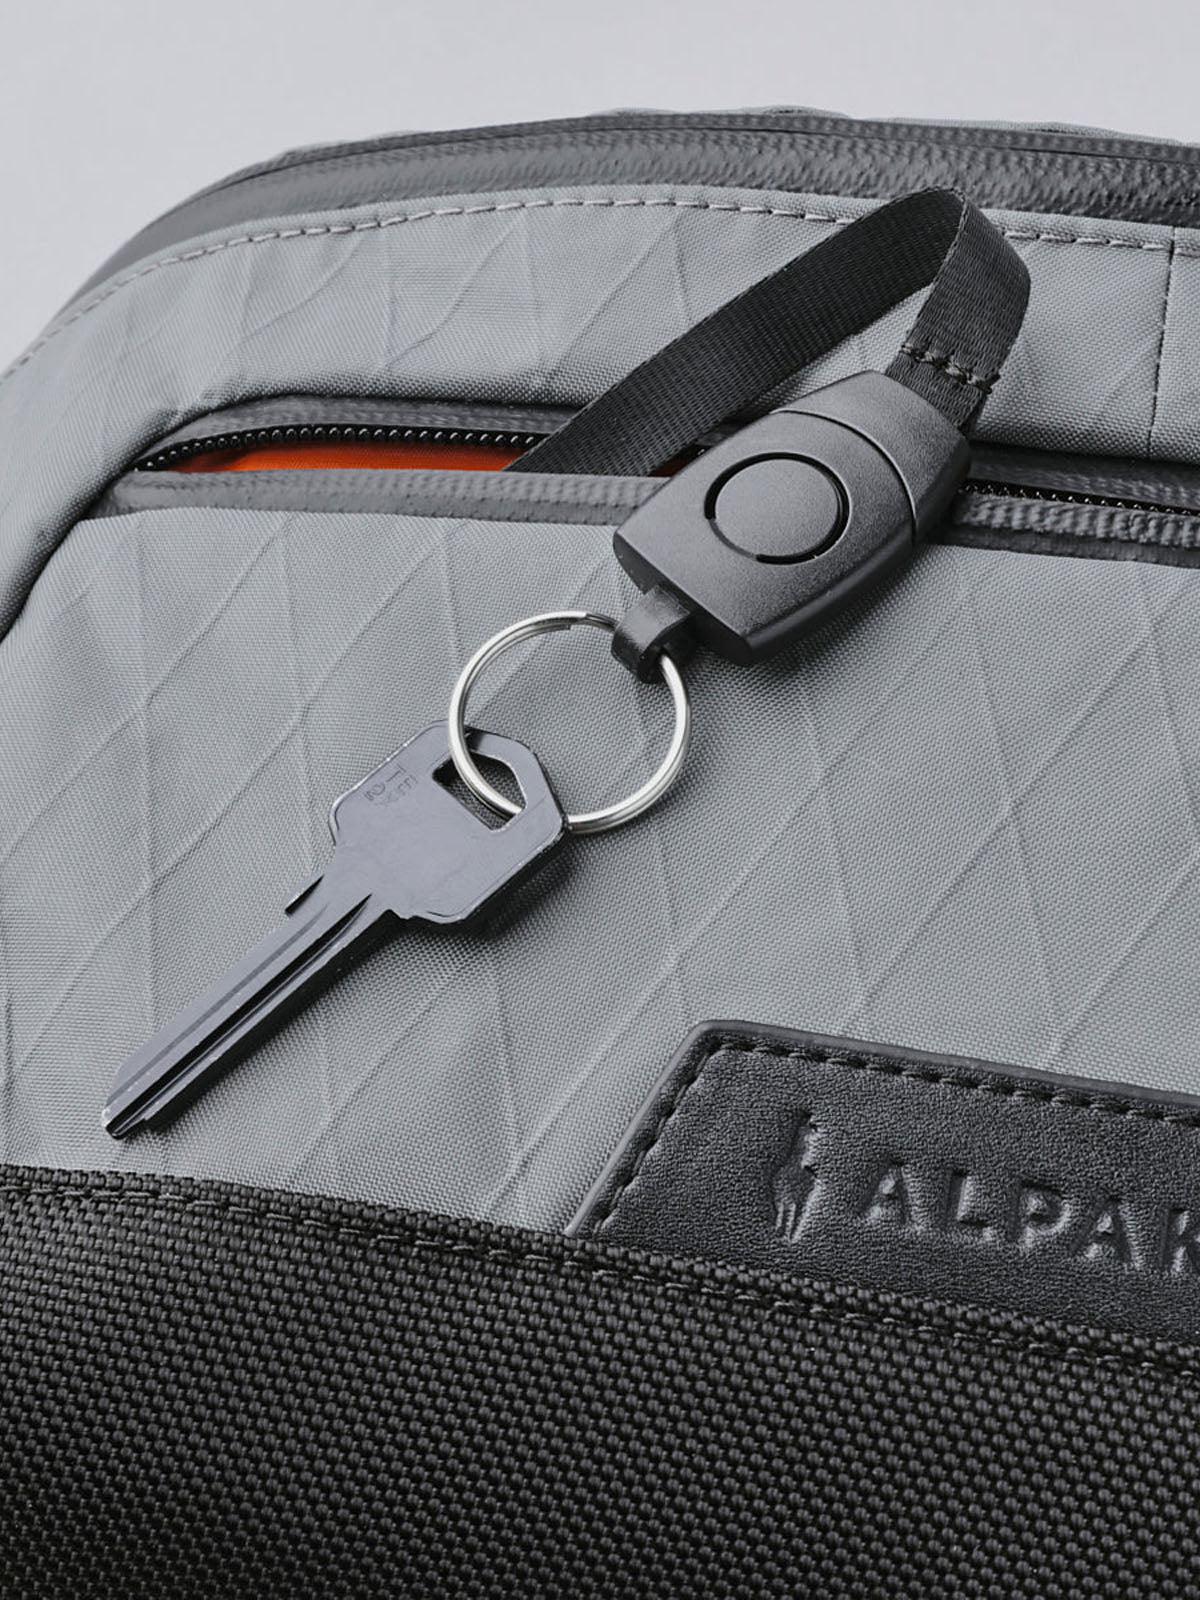 Alpaka Bravo X Sling Limited Edition Slate Grey VX42